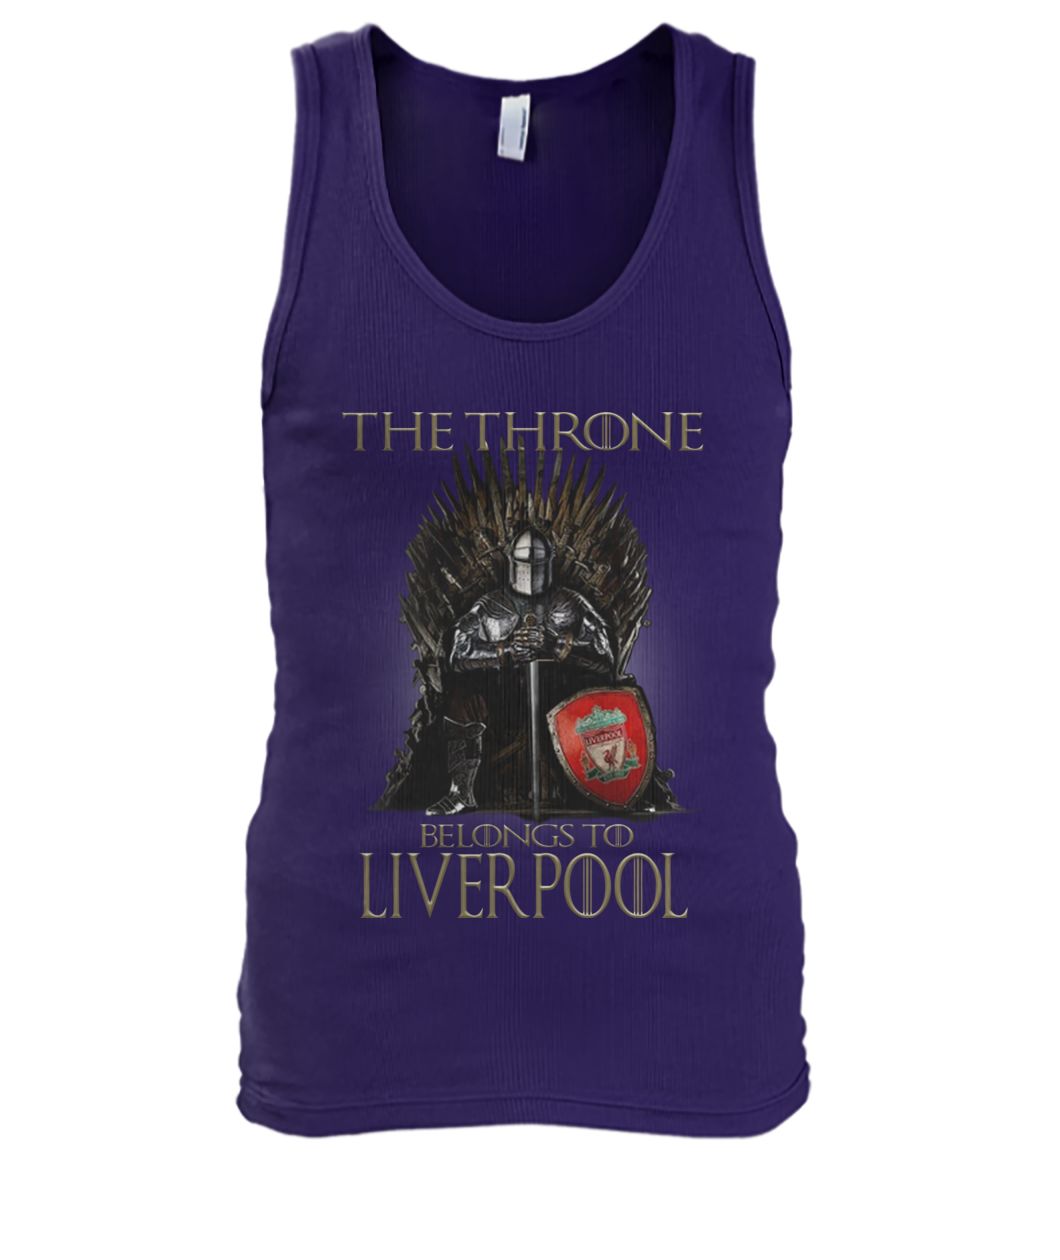 Game of thrones the throne belongs to liverpool men's tank top